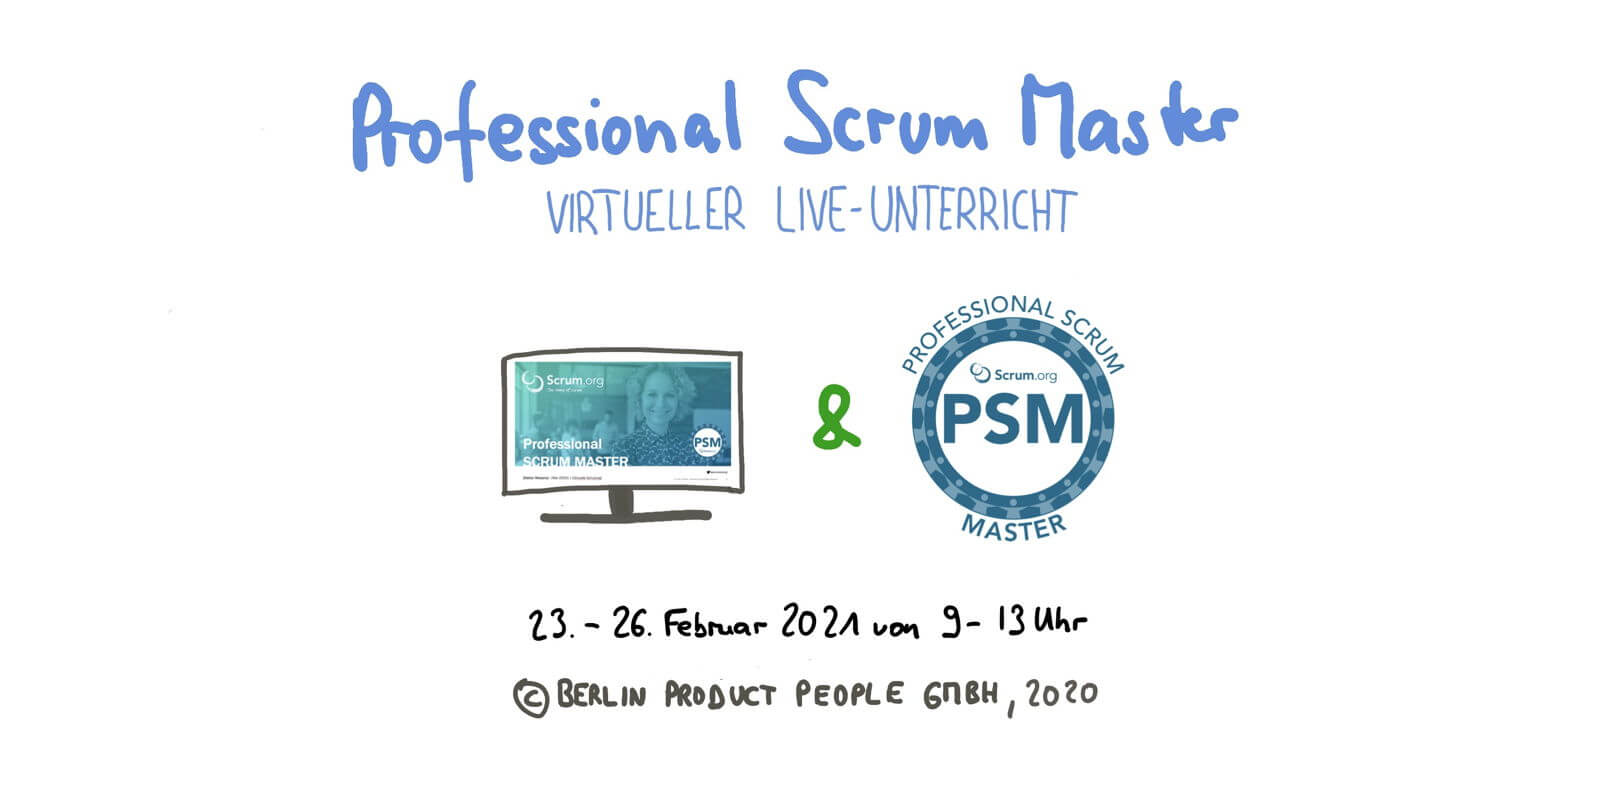 Professional Scrum Master Online-Training PSM I Zertifikat — 23. bis 26. Februar 2021 — Berlin Product People GmbH